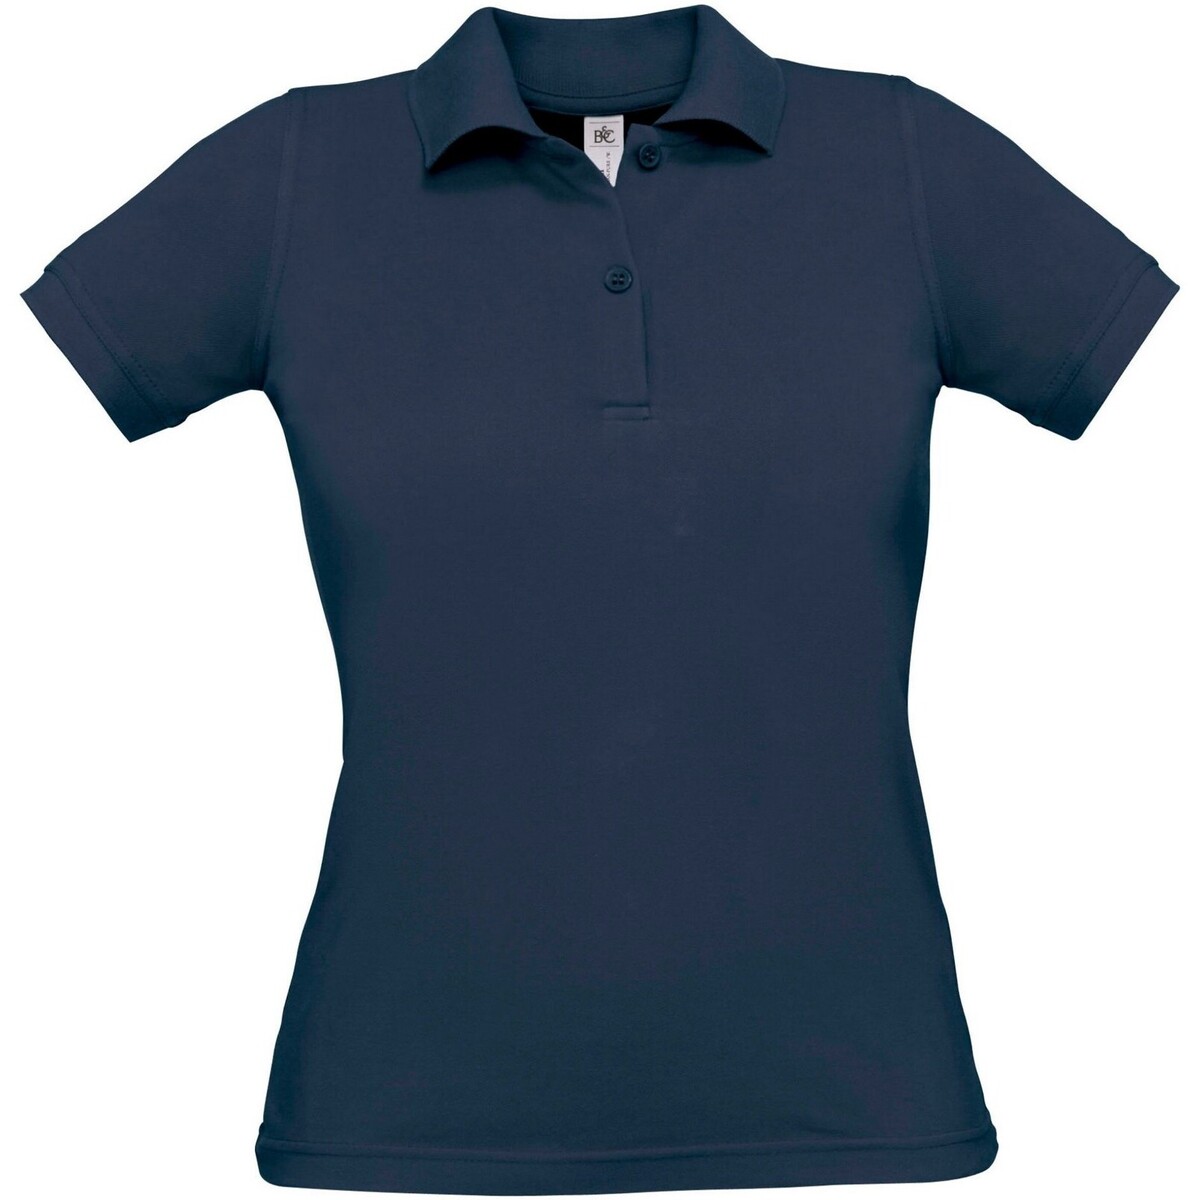 textil Mujer Tops y Camisetas B&c Safran Pure Azul